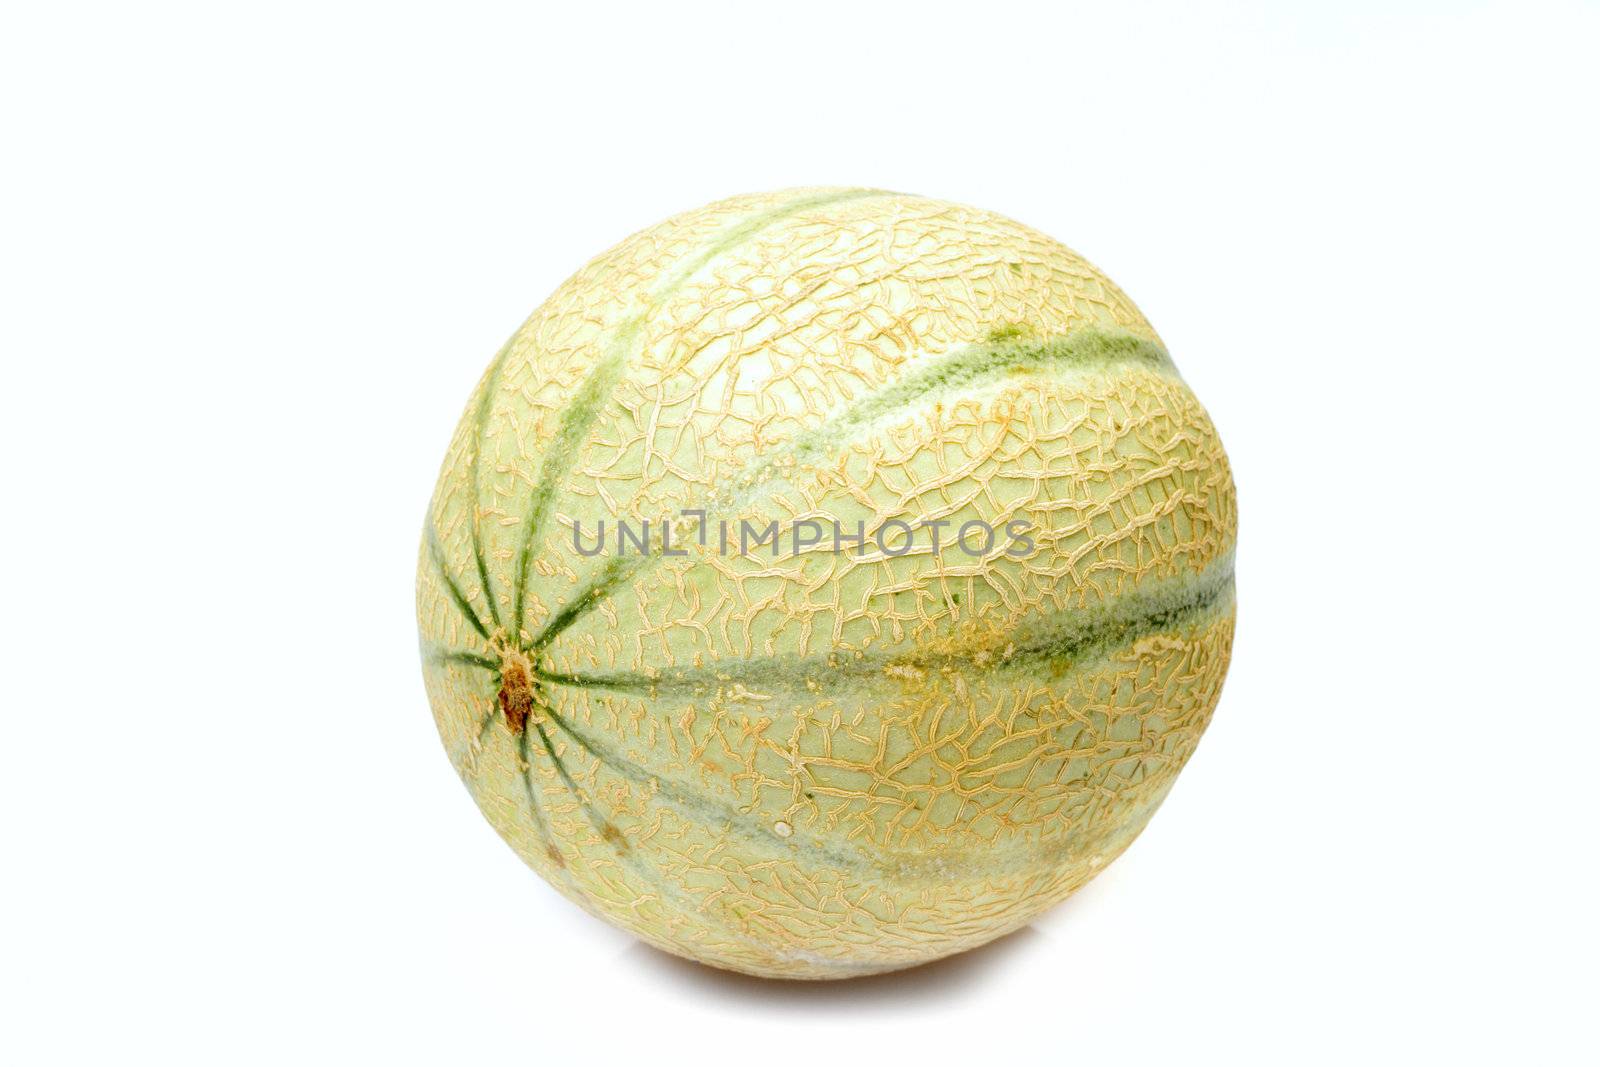 ripe melon, photo on the white background